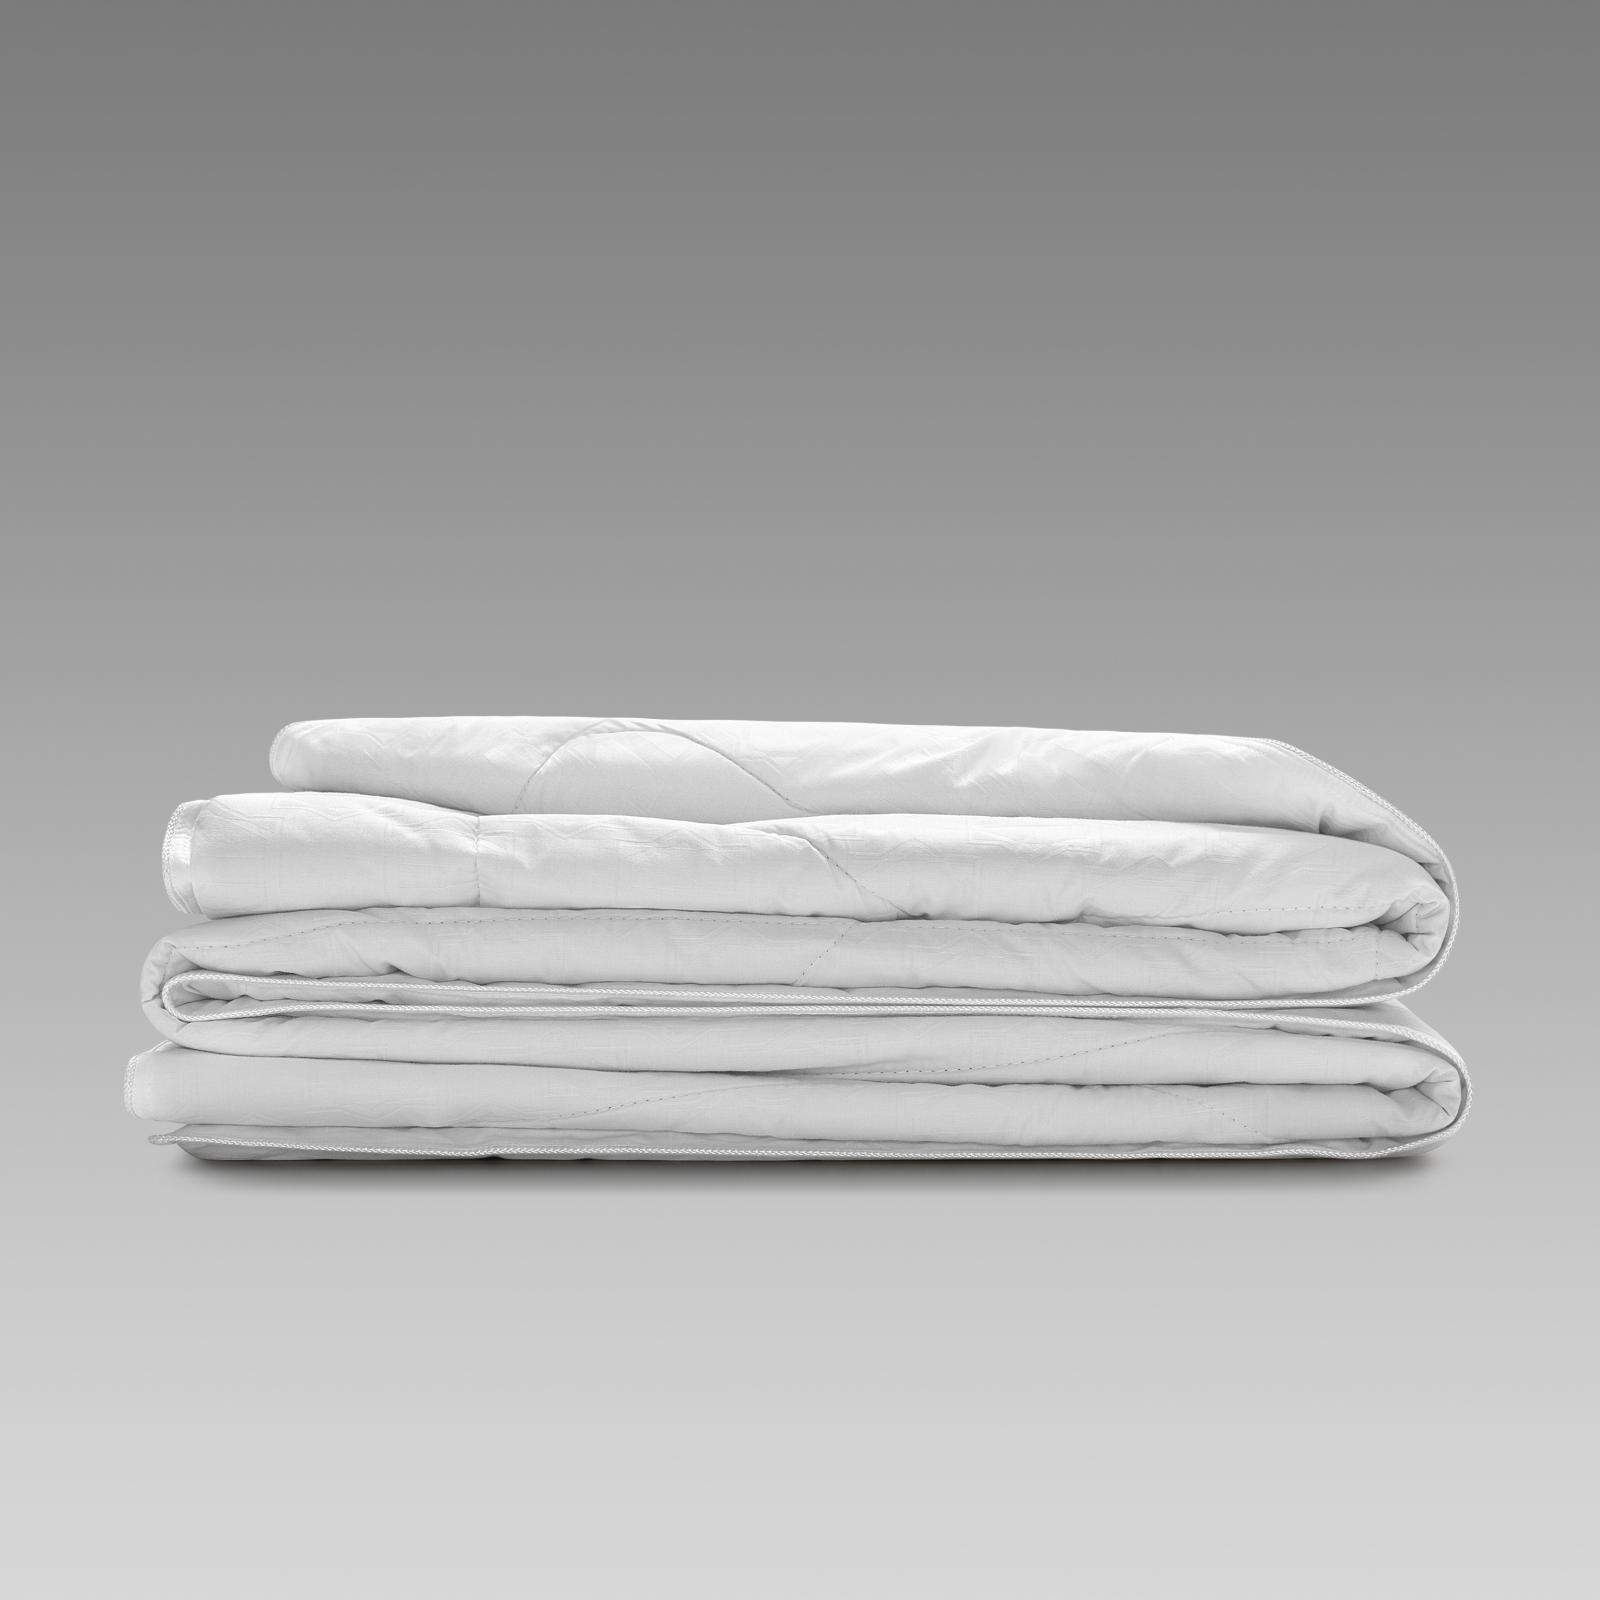 Одеяло Togas Маэстро (20.04.17.0088), размер 140х200 см - фото 2